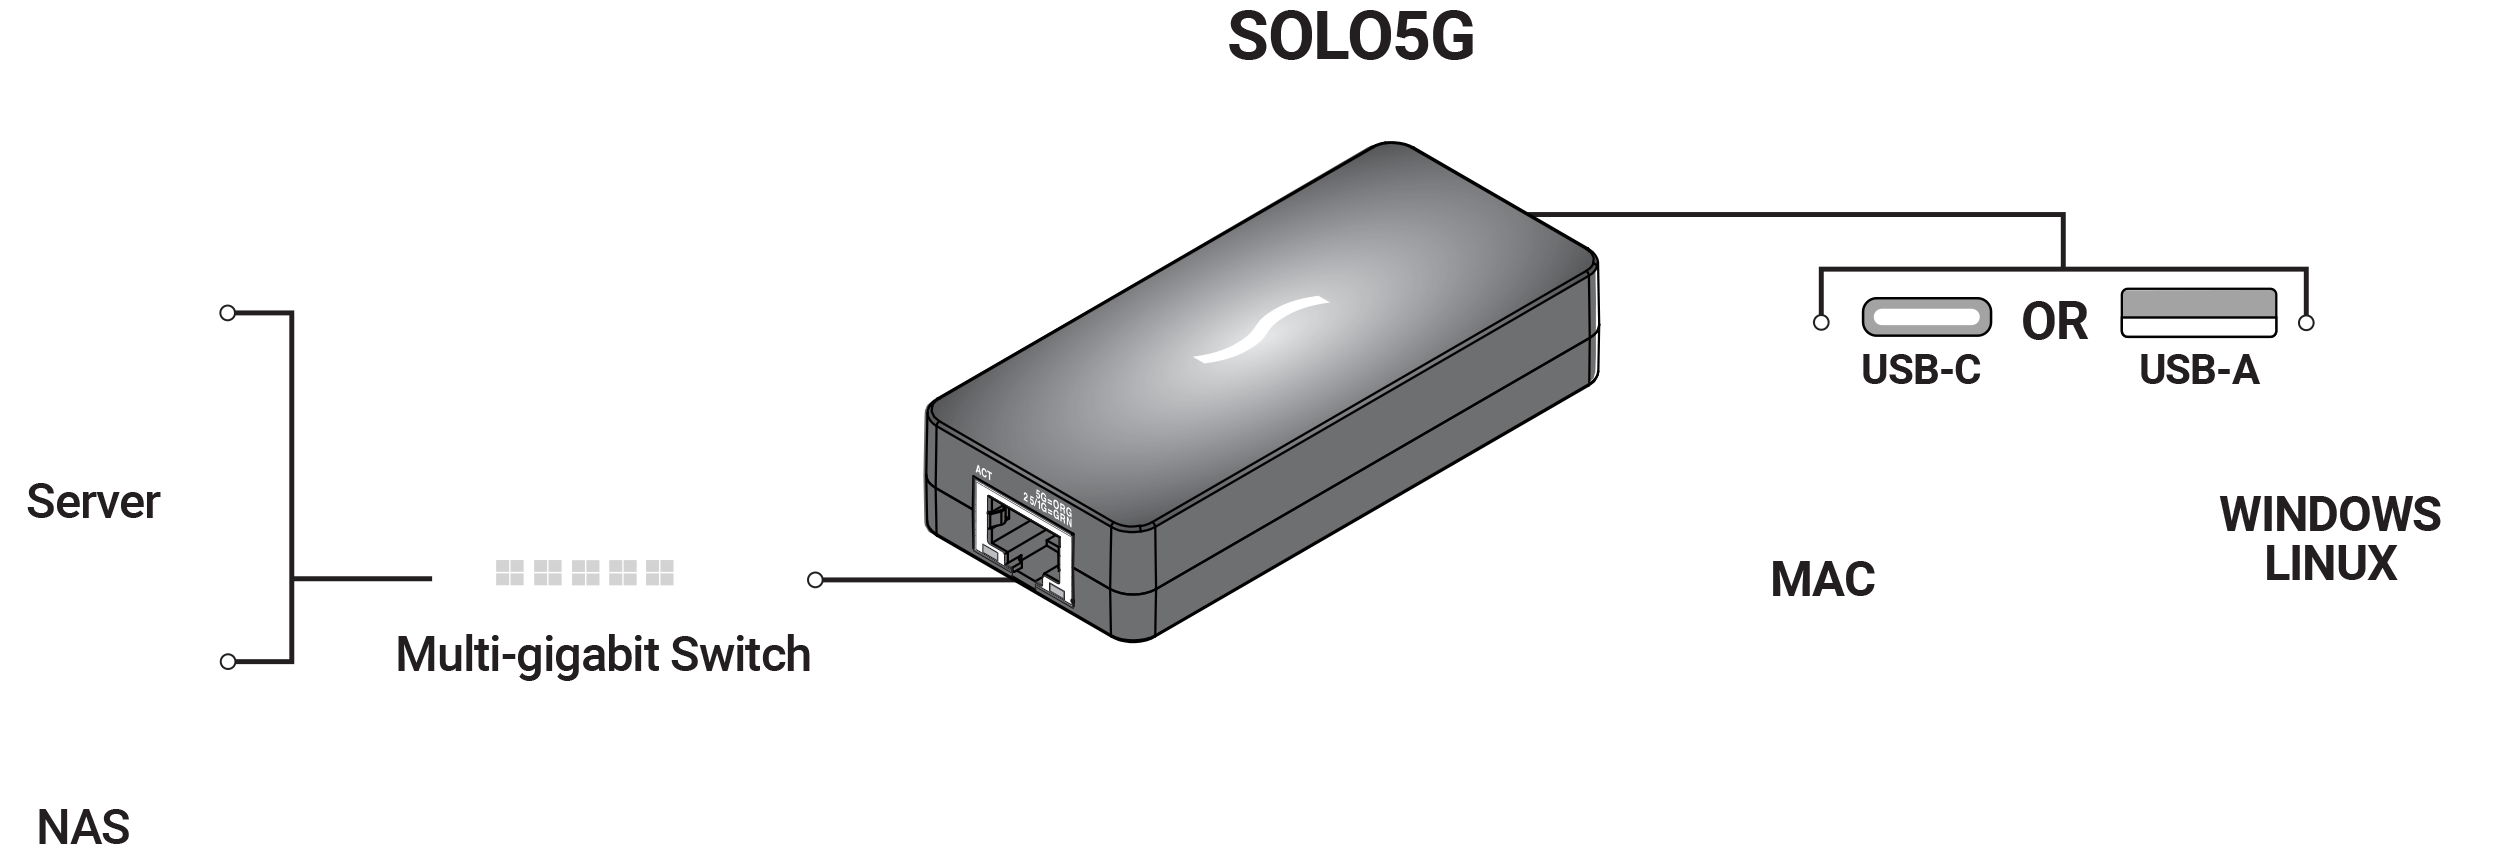 Solo5G Configuration Illustration